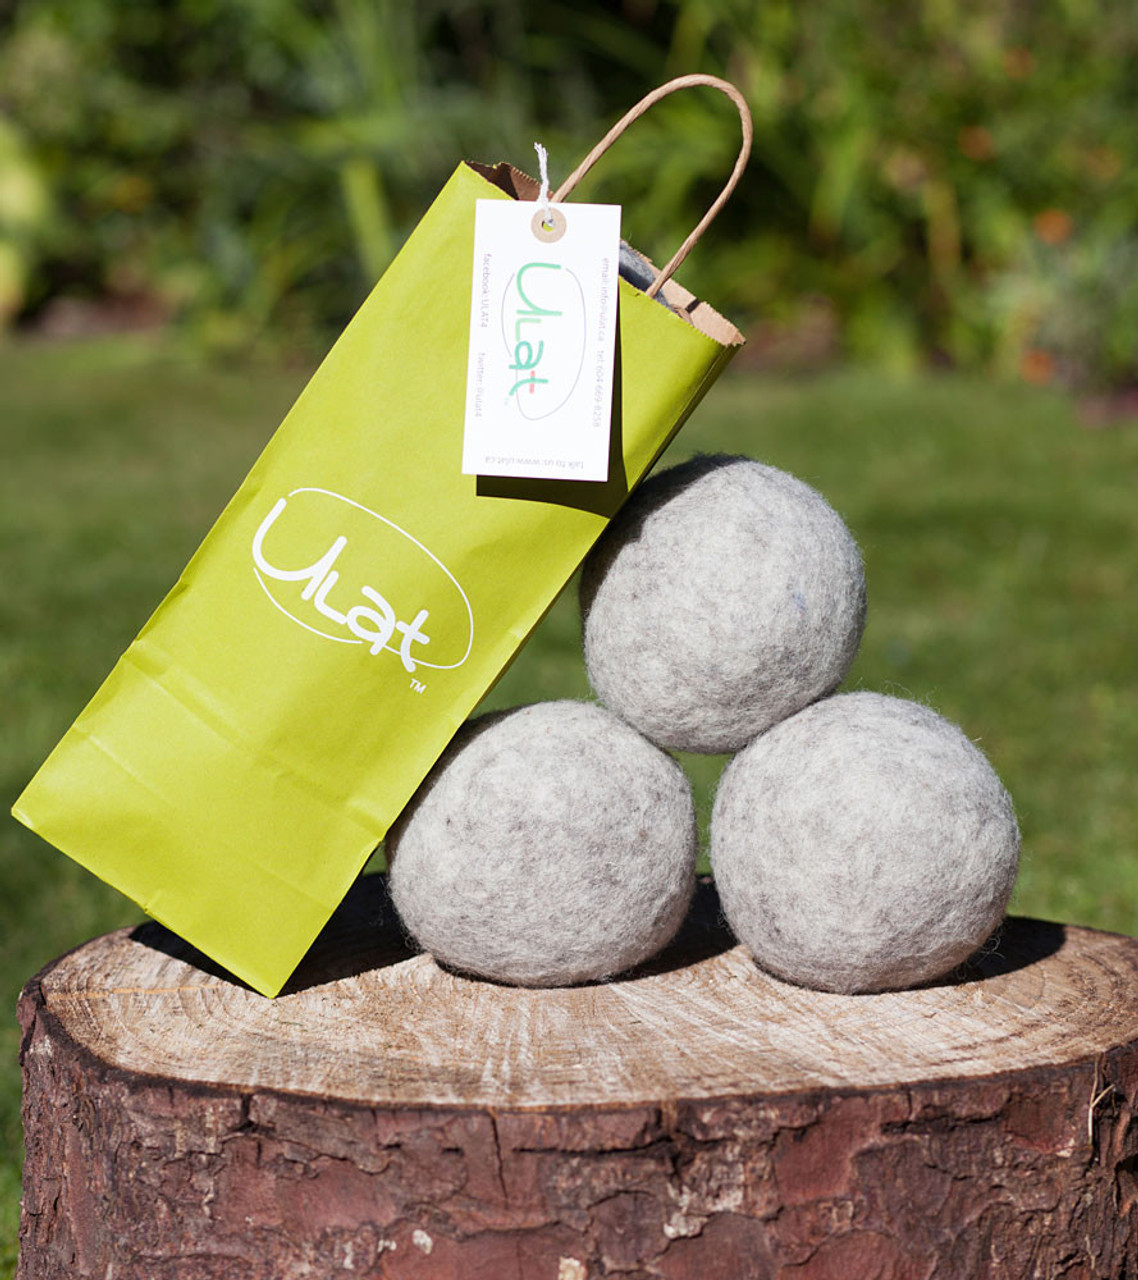 Wool Dryer Balls – Beachwood Essentials